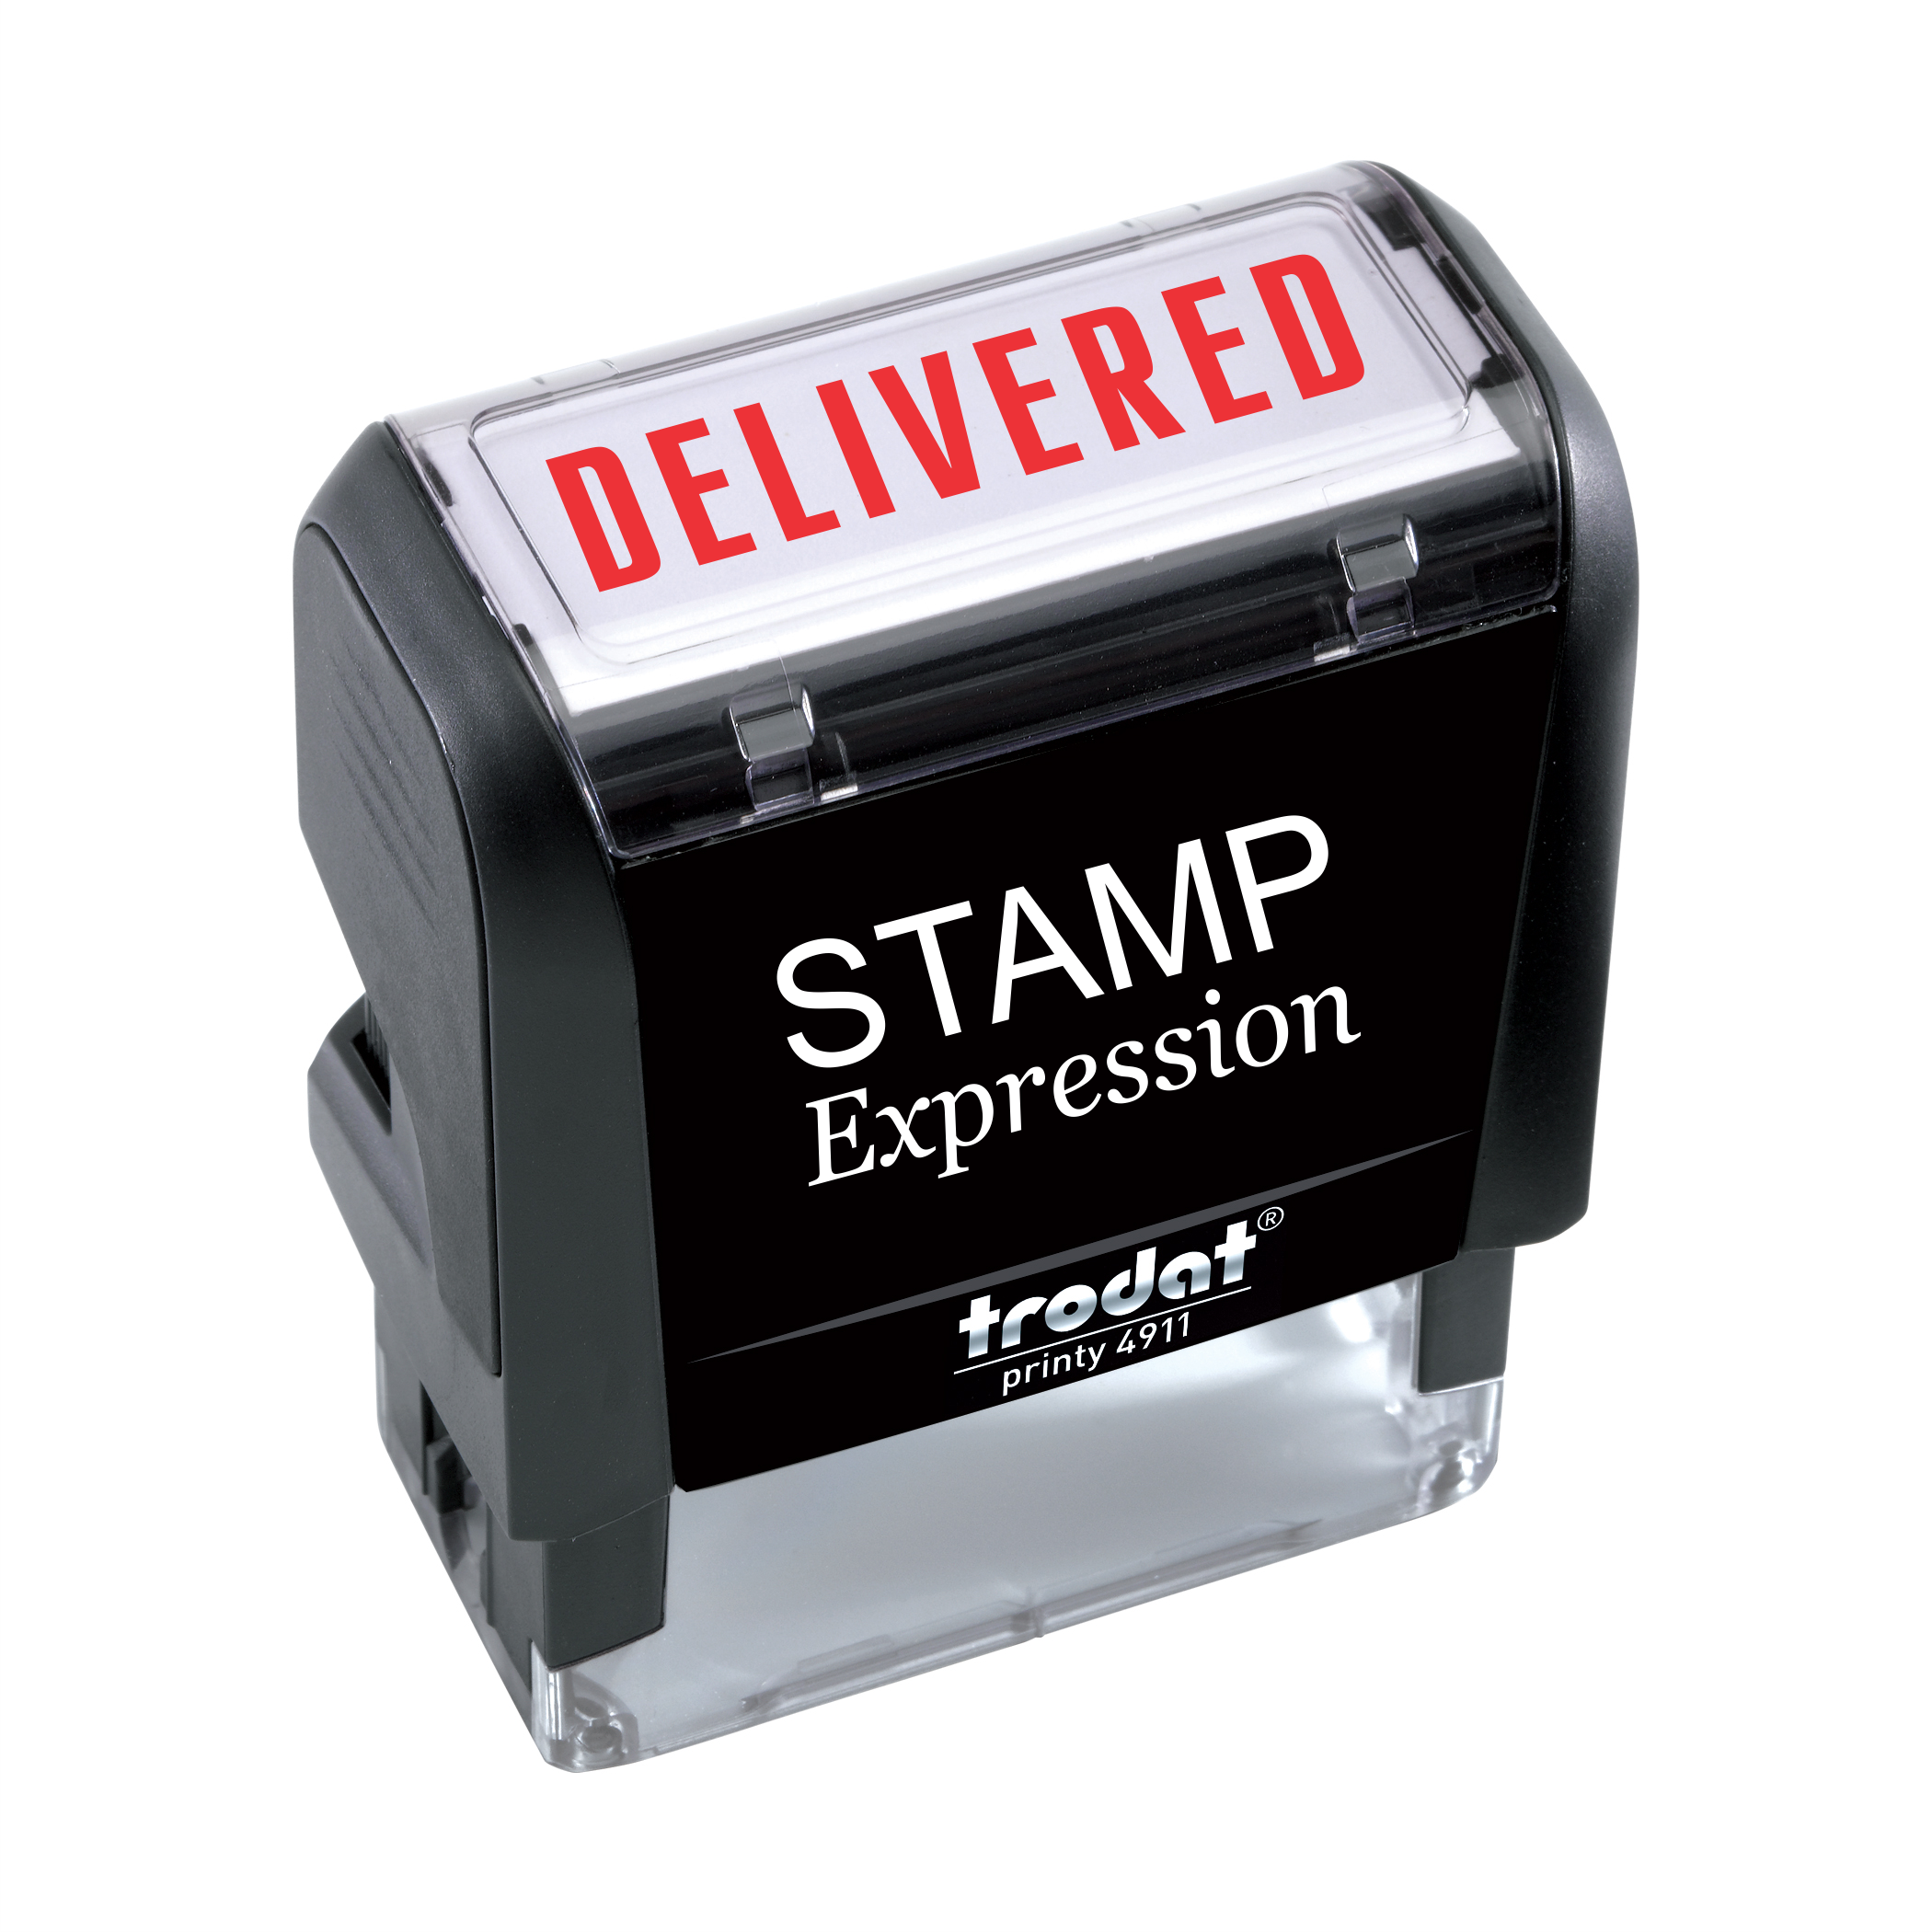 Delivered Office Self Inking Rubber Stamp